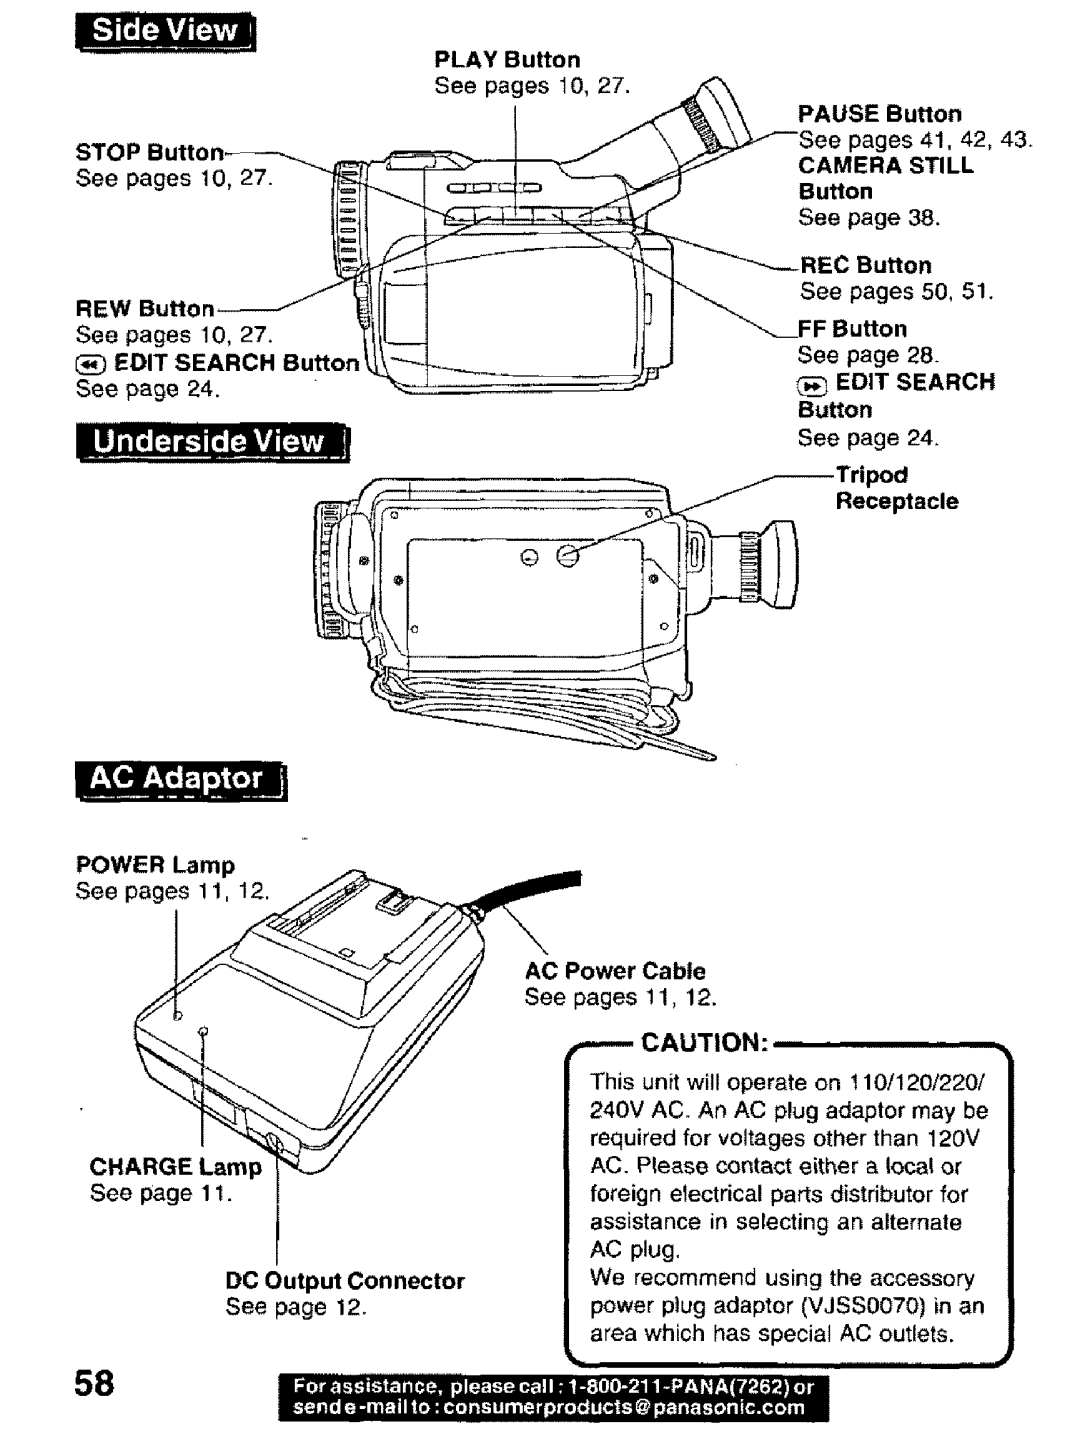 Panasonic PV-DV101 manual See pages 